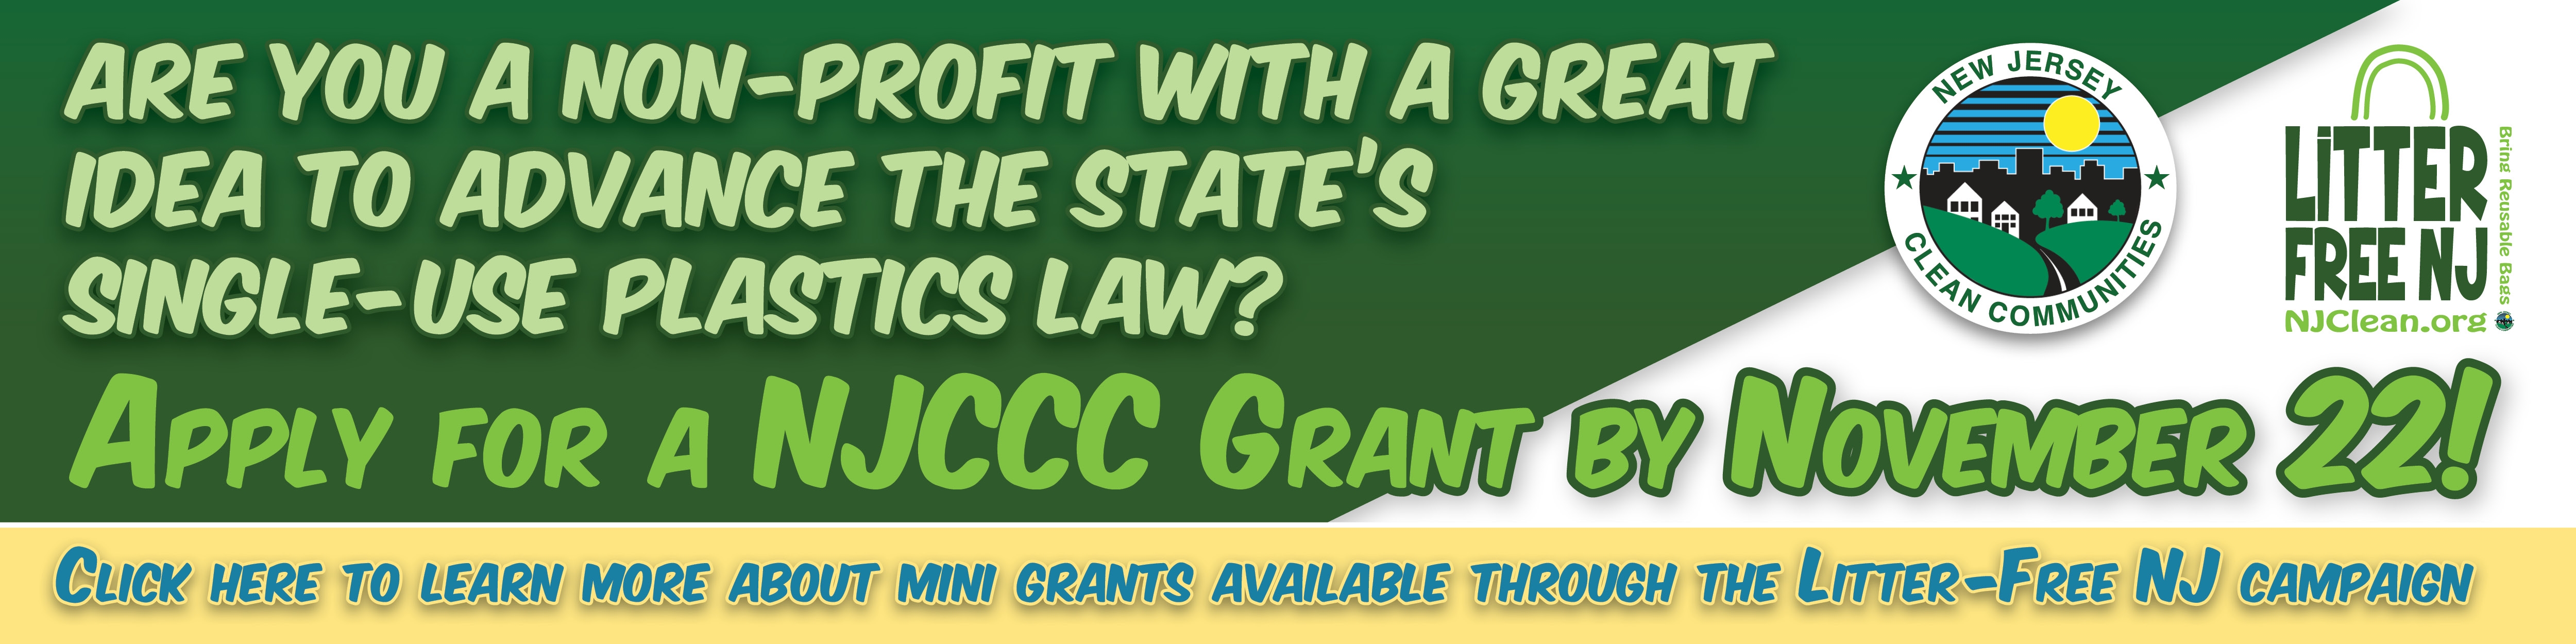 NJCCC Grant banner